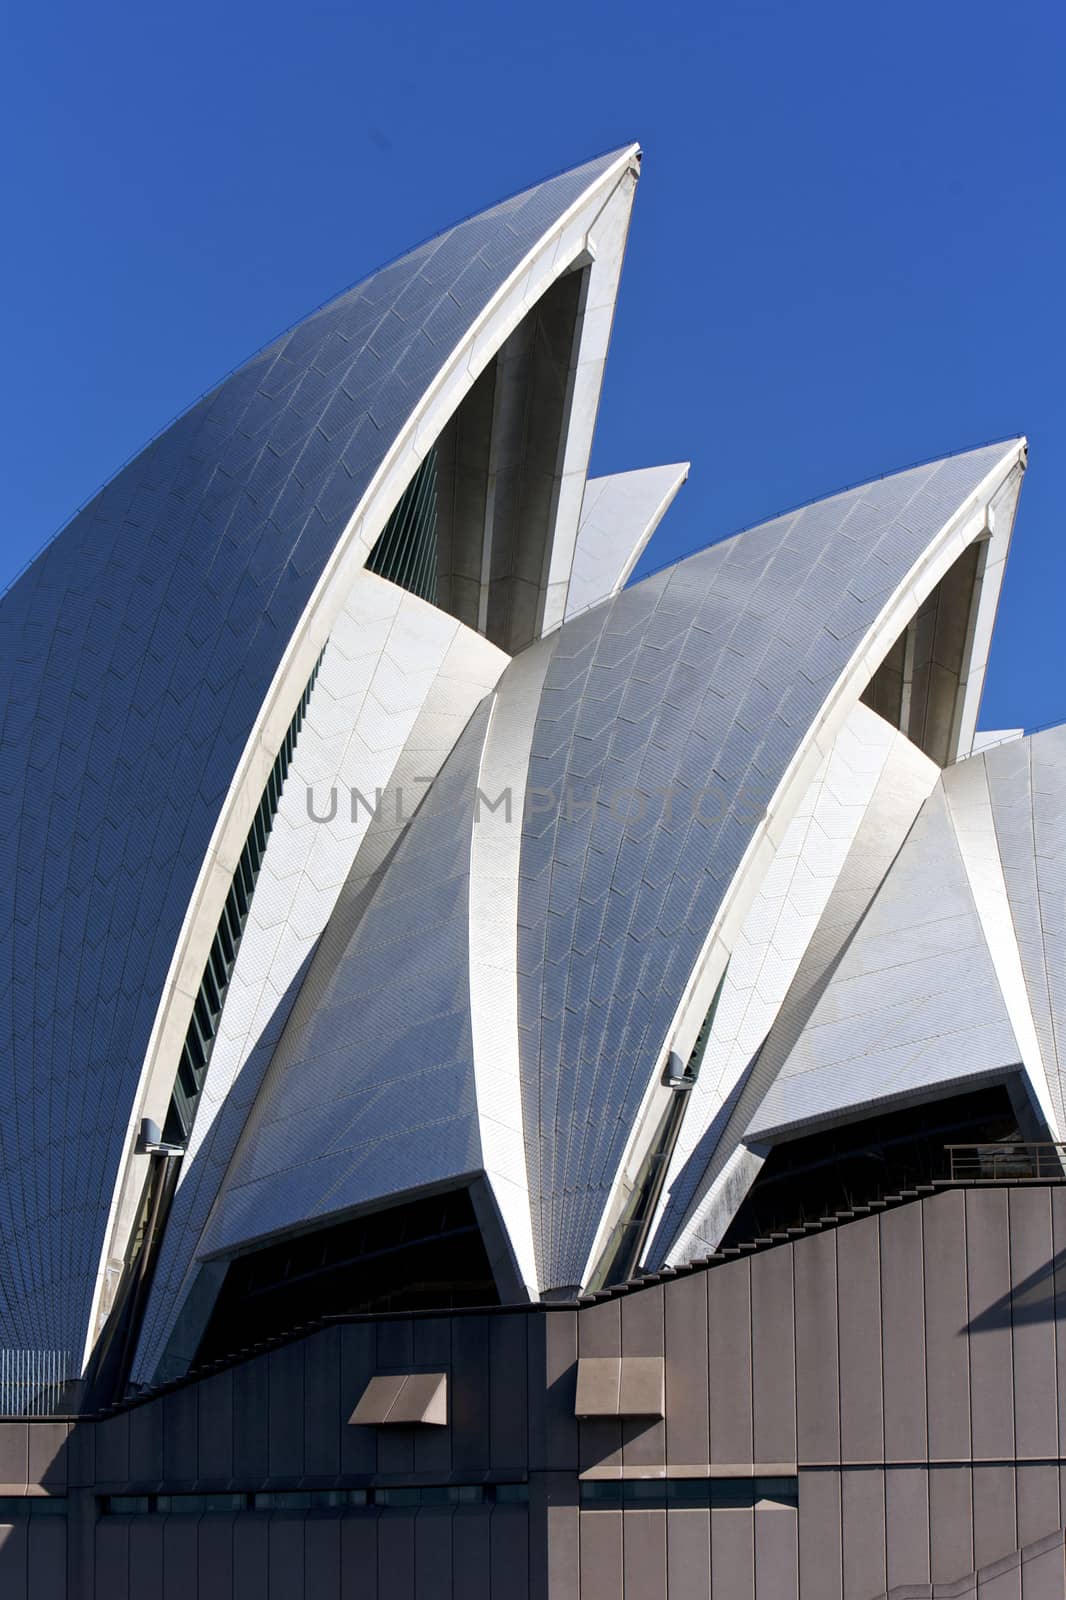 Sydney Opera House in Sydney, Australia Entertainment and a Important Landmark